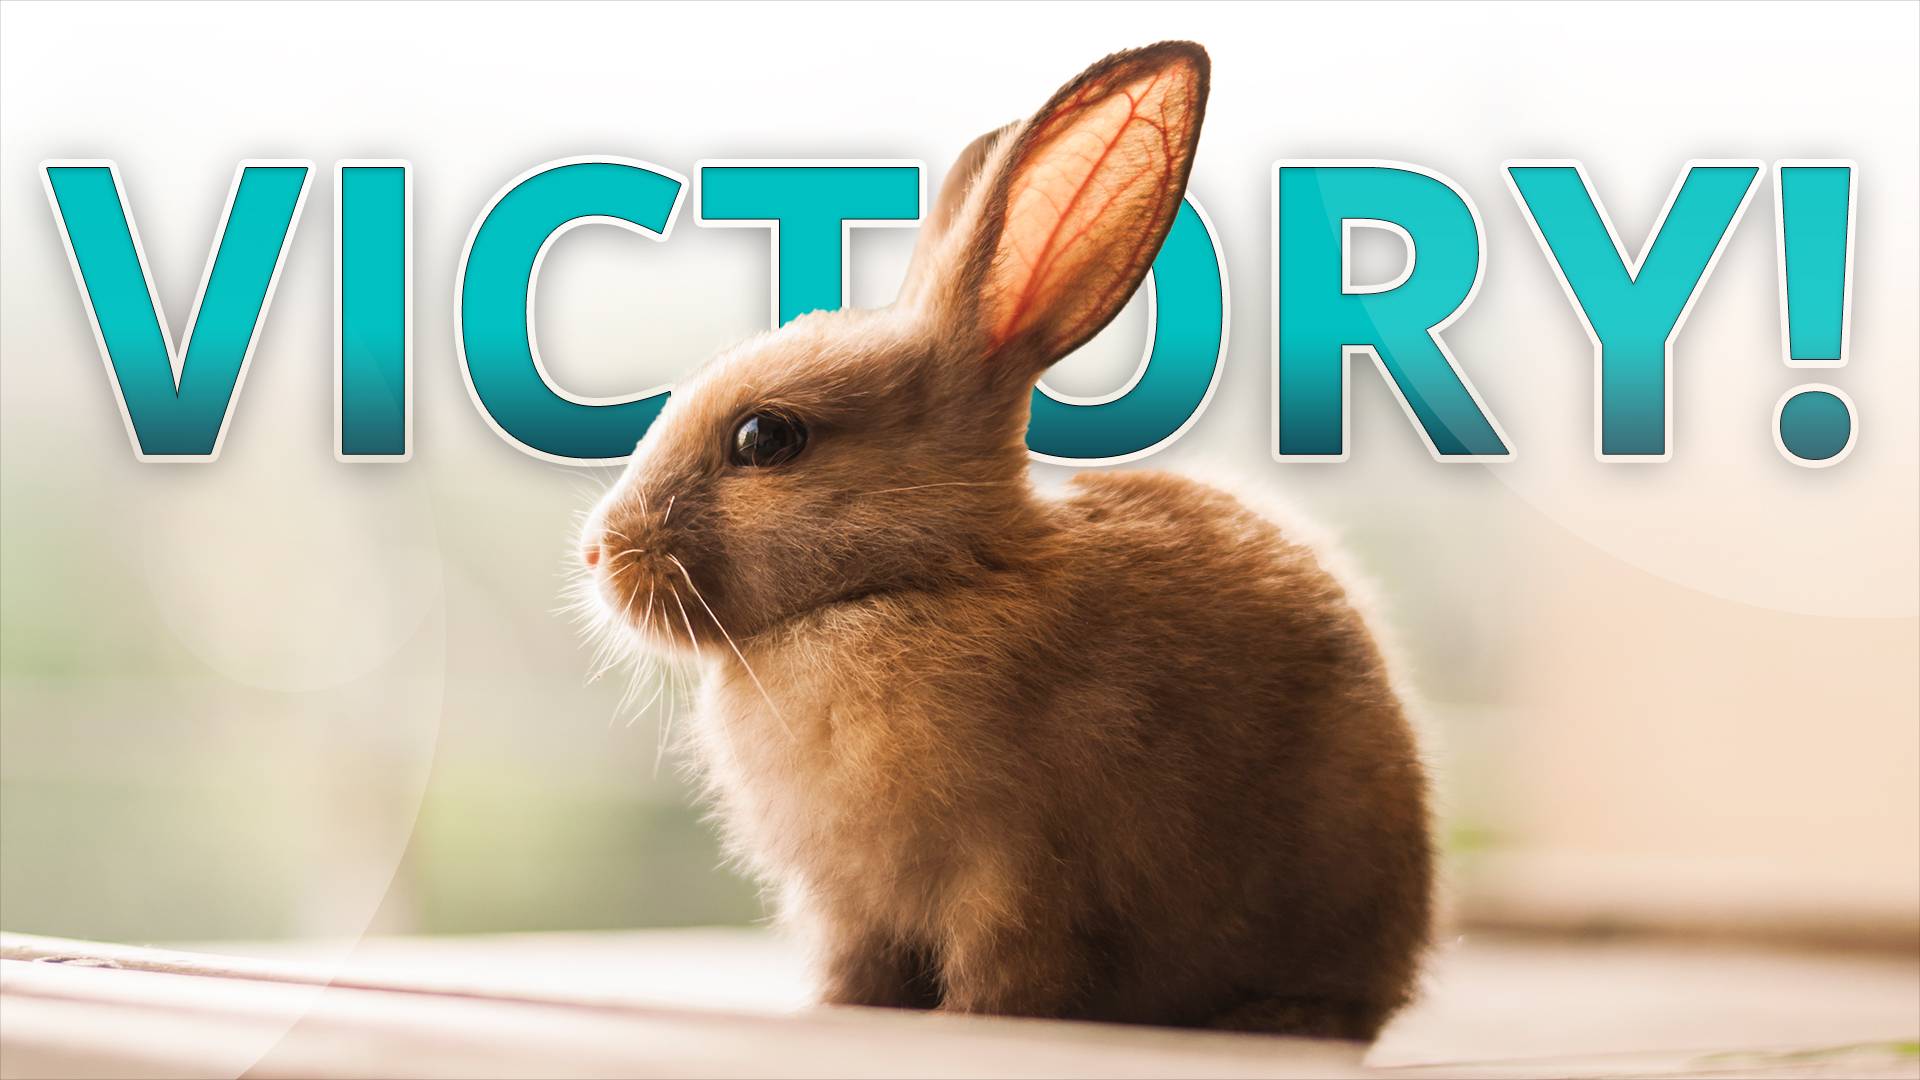 Victory for Animals: U.S. Senate Drops Harmful Cosmetics Provision